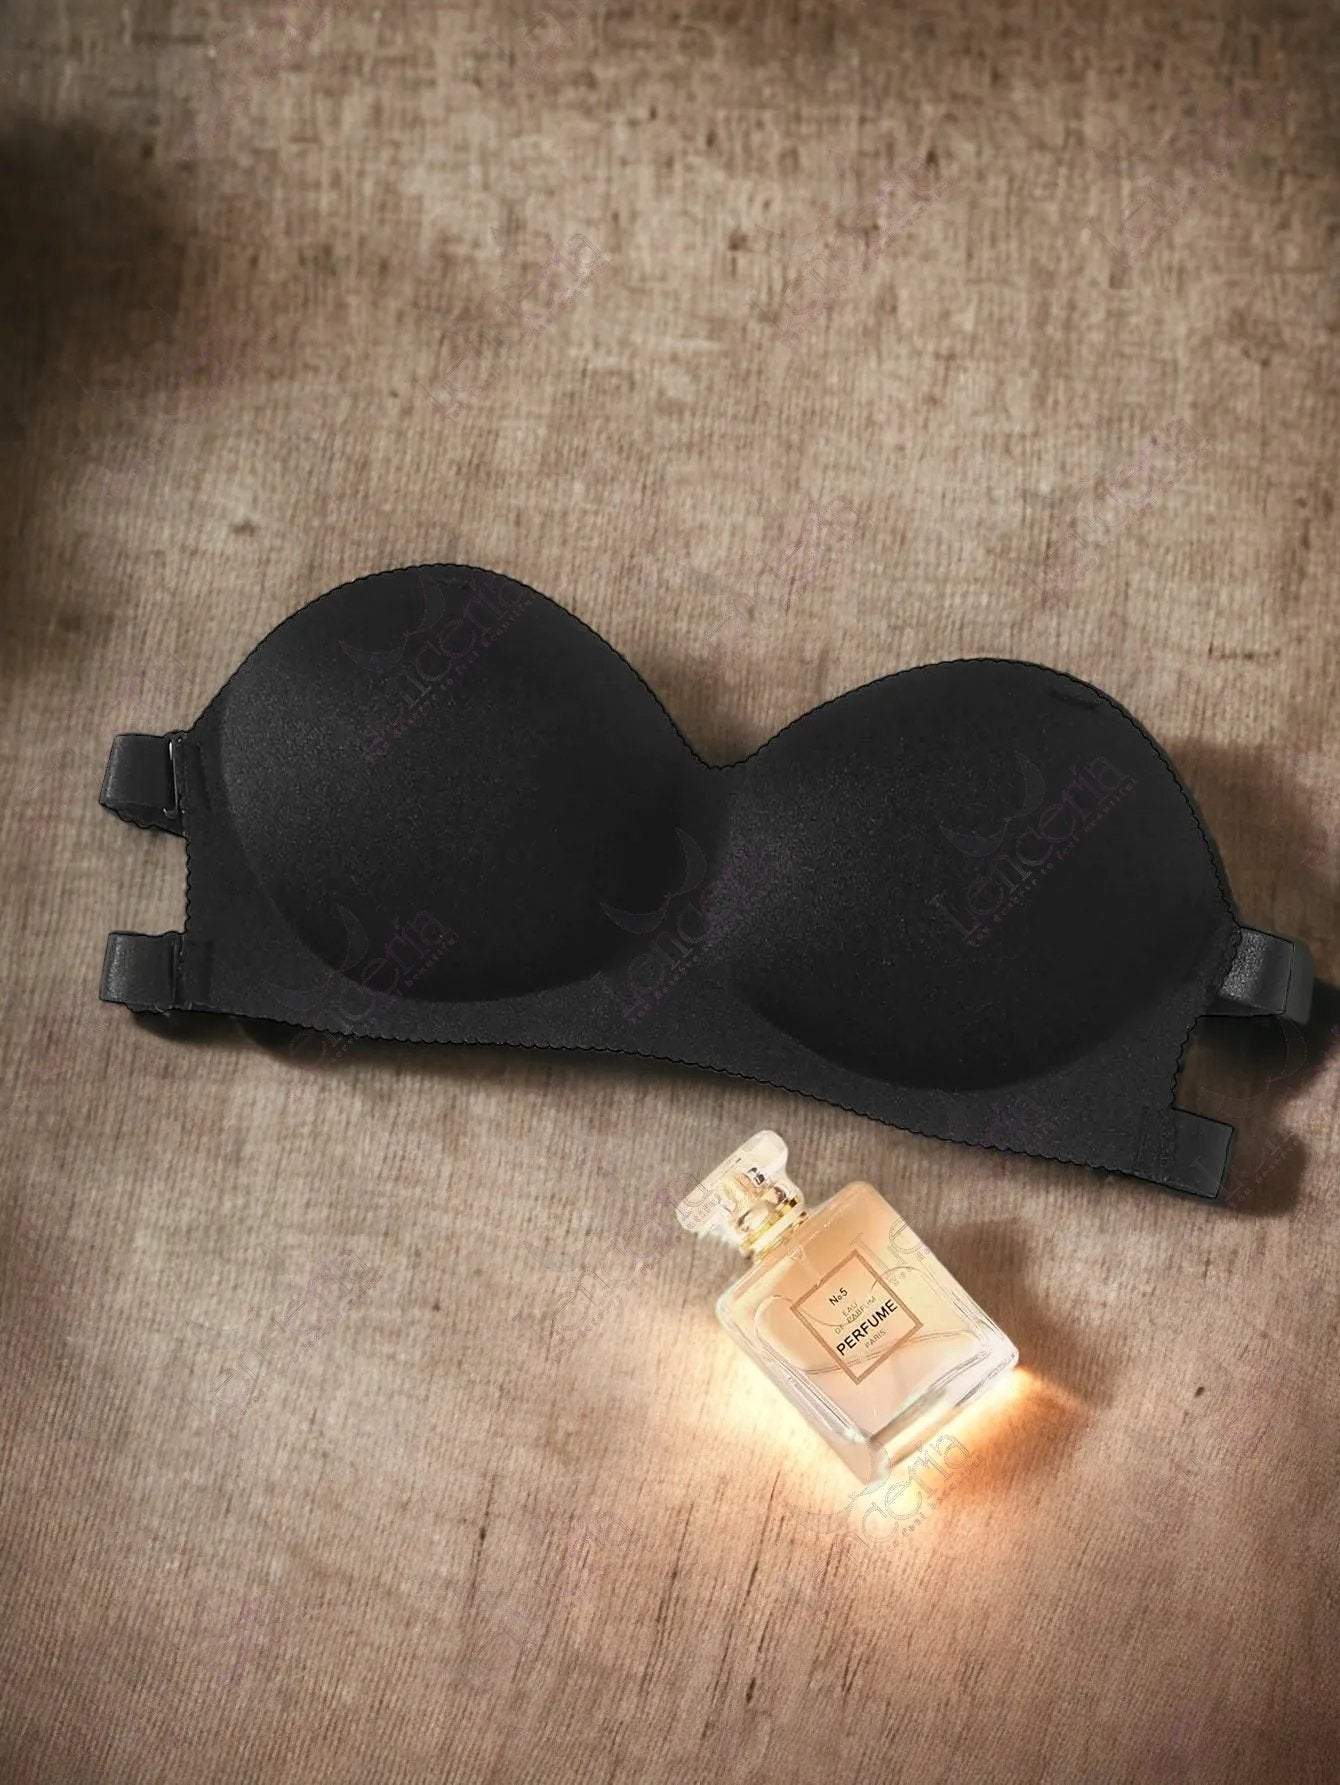 Cheriee everyday essentials Noir lightly padded pushup bra - very cute (c31)